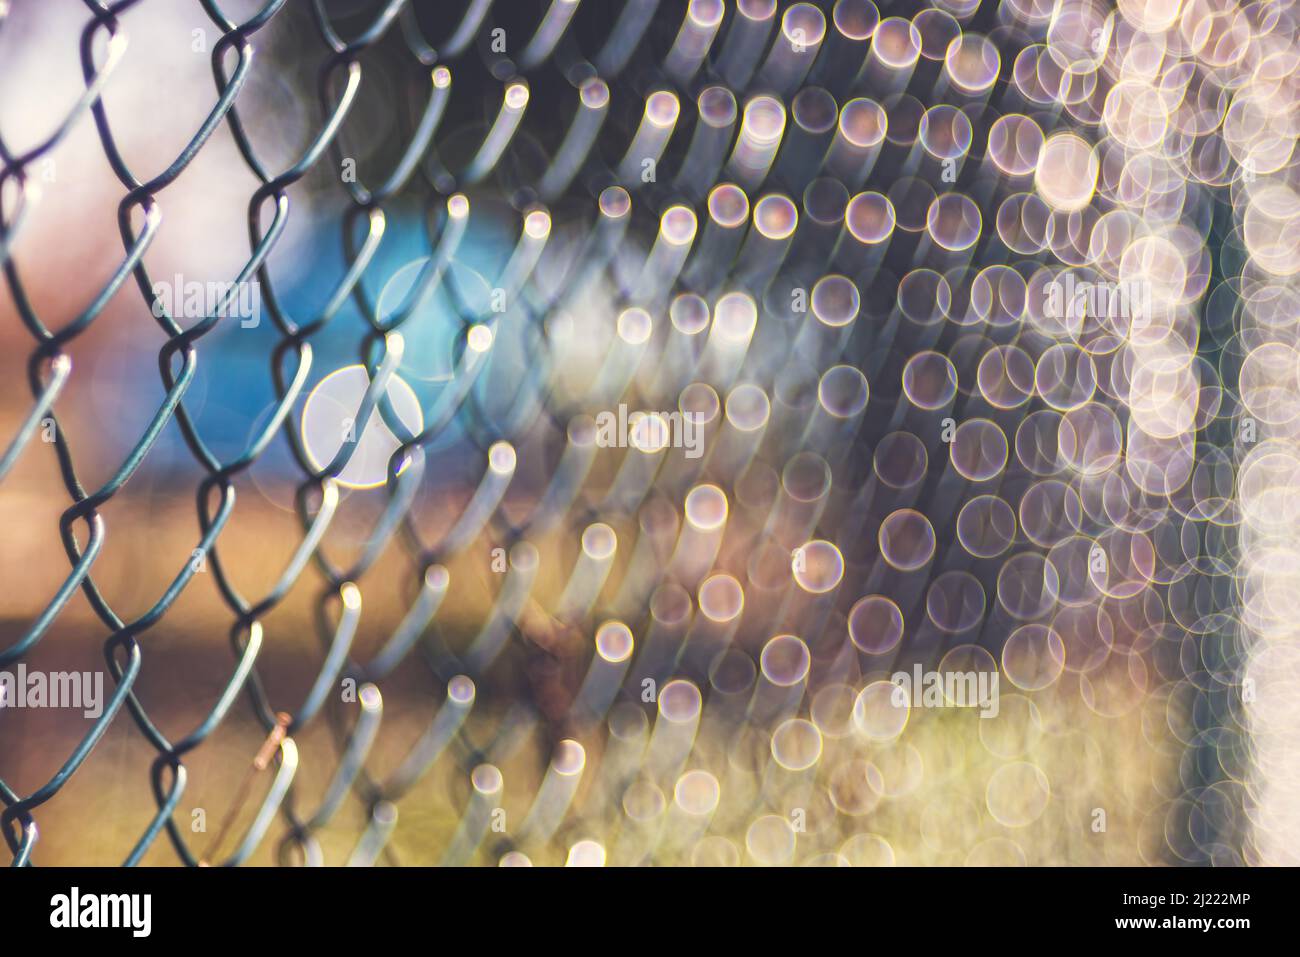 Old rusty metal wire mesh outdoor defocus background, blurred texture, soft focus vintage lens Stock Photo